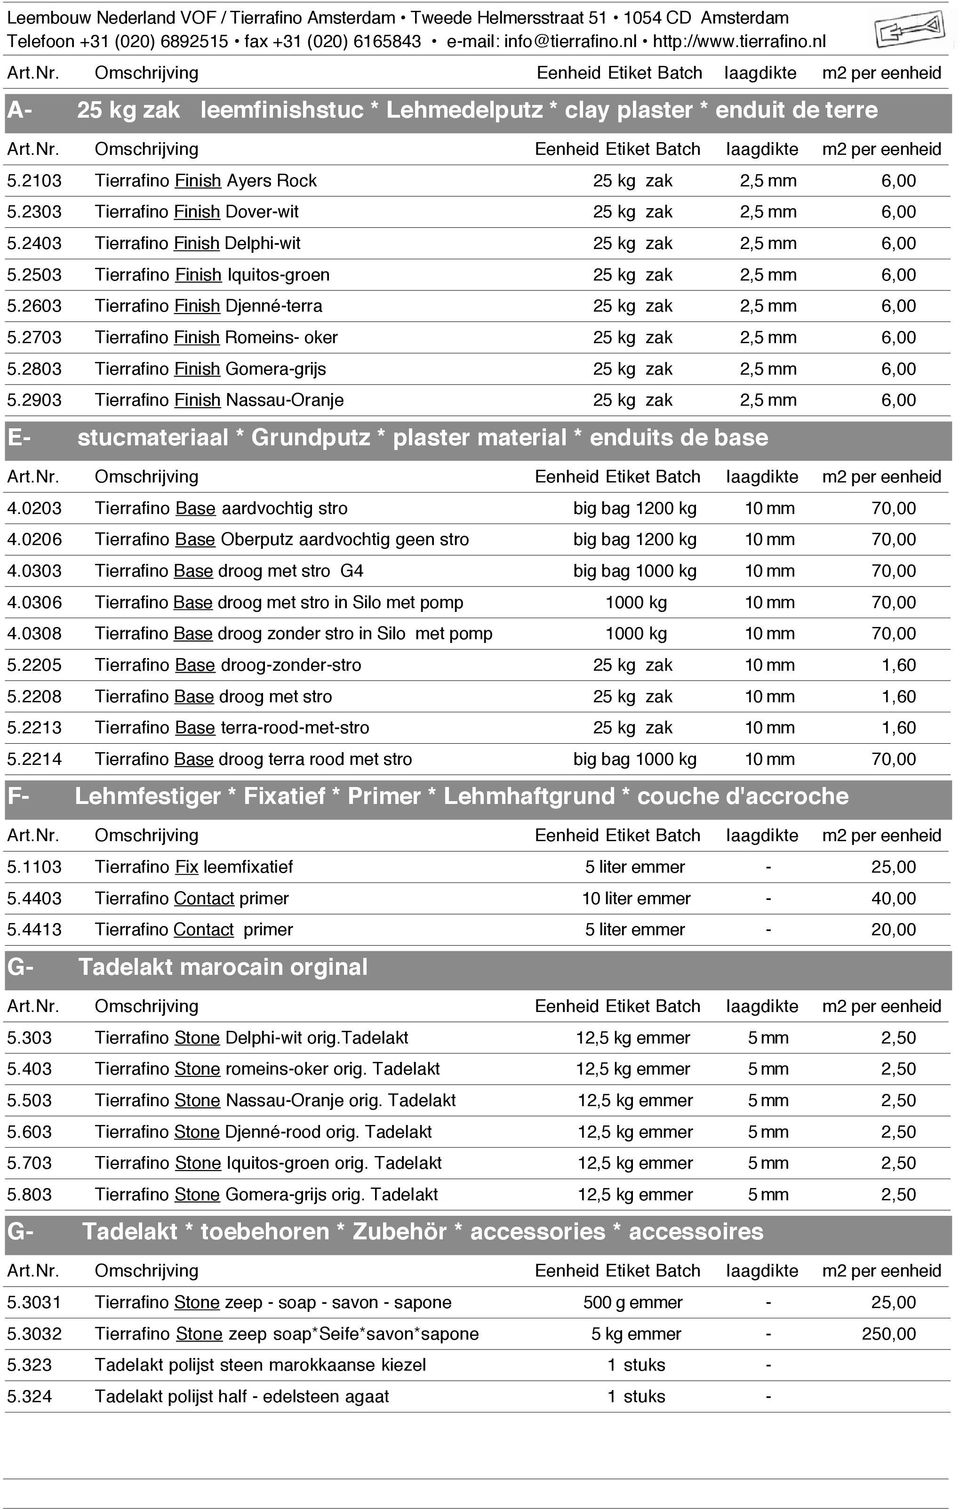 2703 Tierrafino Finish Romeins- oker 25 kg zak 2,5 mm 6,00 5.2803 Tierrafino Finish Gomera-grijs 25 kg zak 2,5 mm 6,00 5.